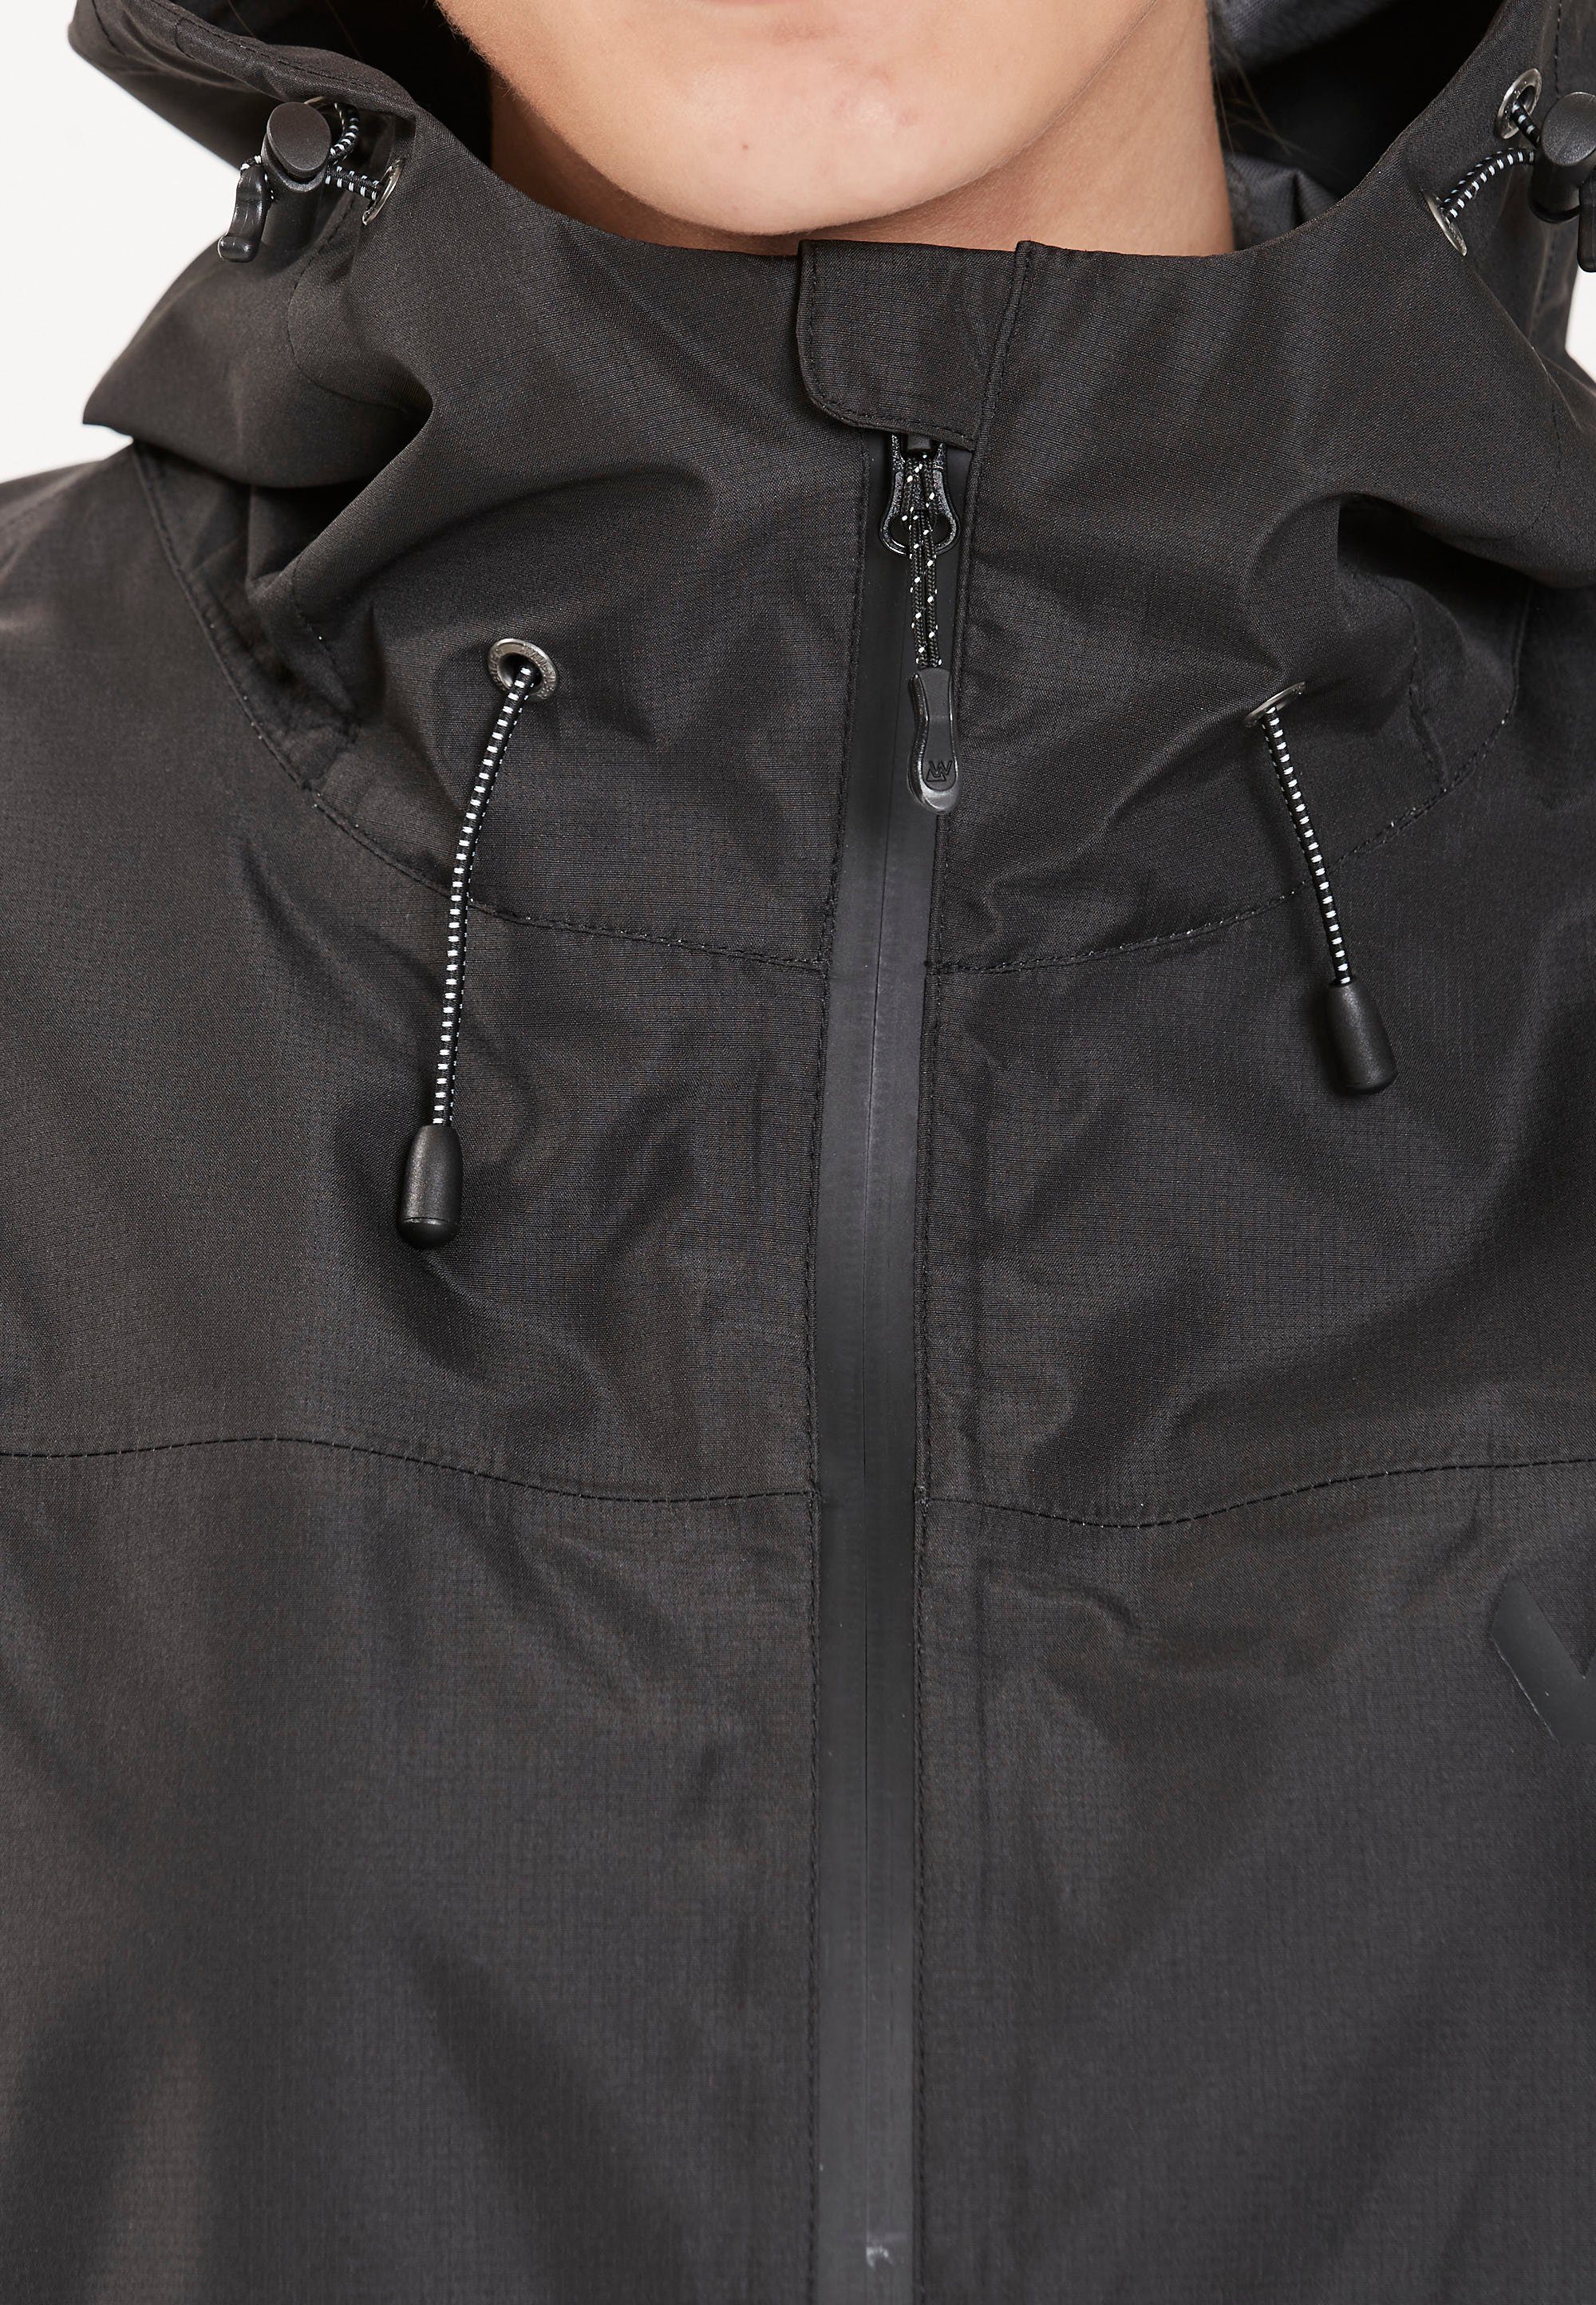 WHISTLER Softshelljacke BROOK W mit W-PRO Shell praktischer Kapuze 15000 Jacket schwarz